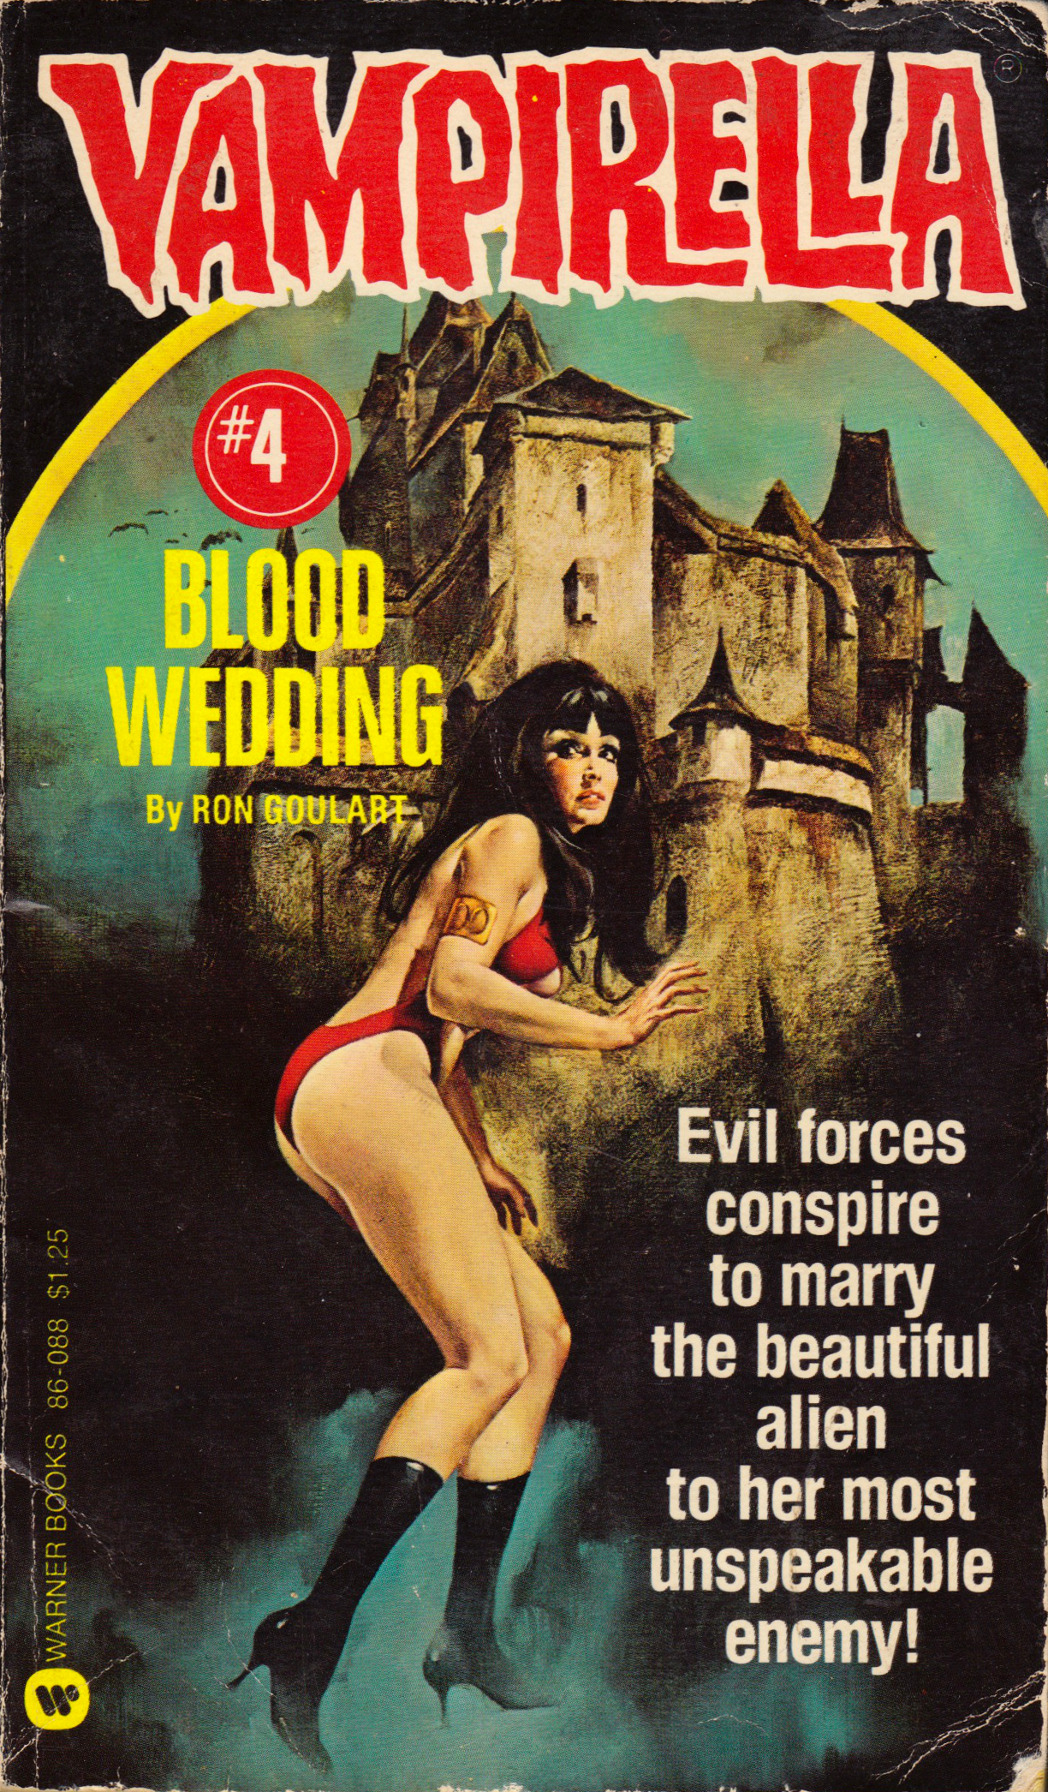 Vampirella No.4: Blood Wedding, by Ron Goulart (Warner Books, 1976).From Oxfam in